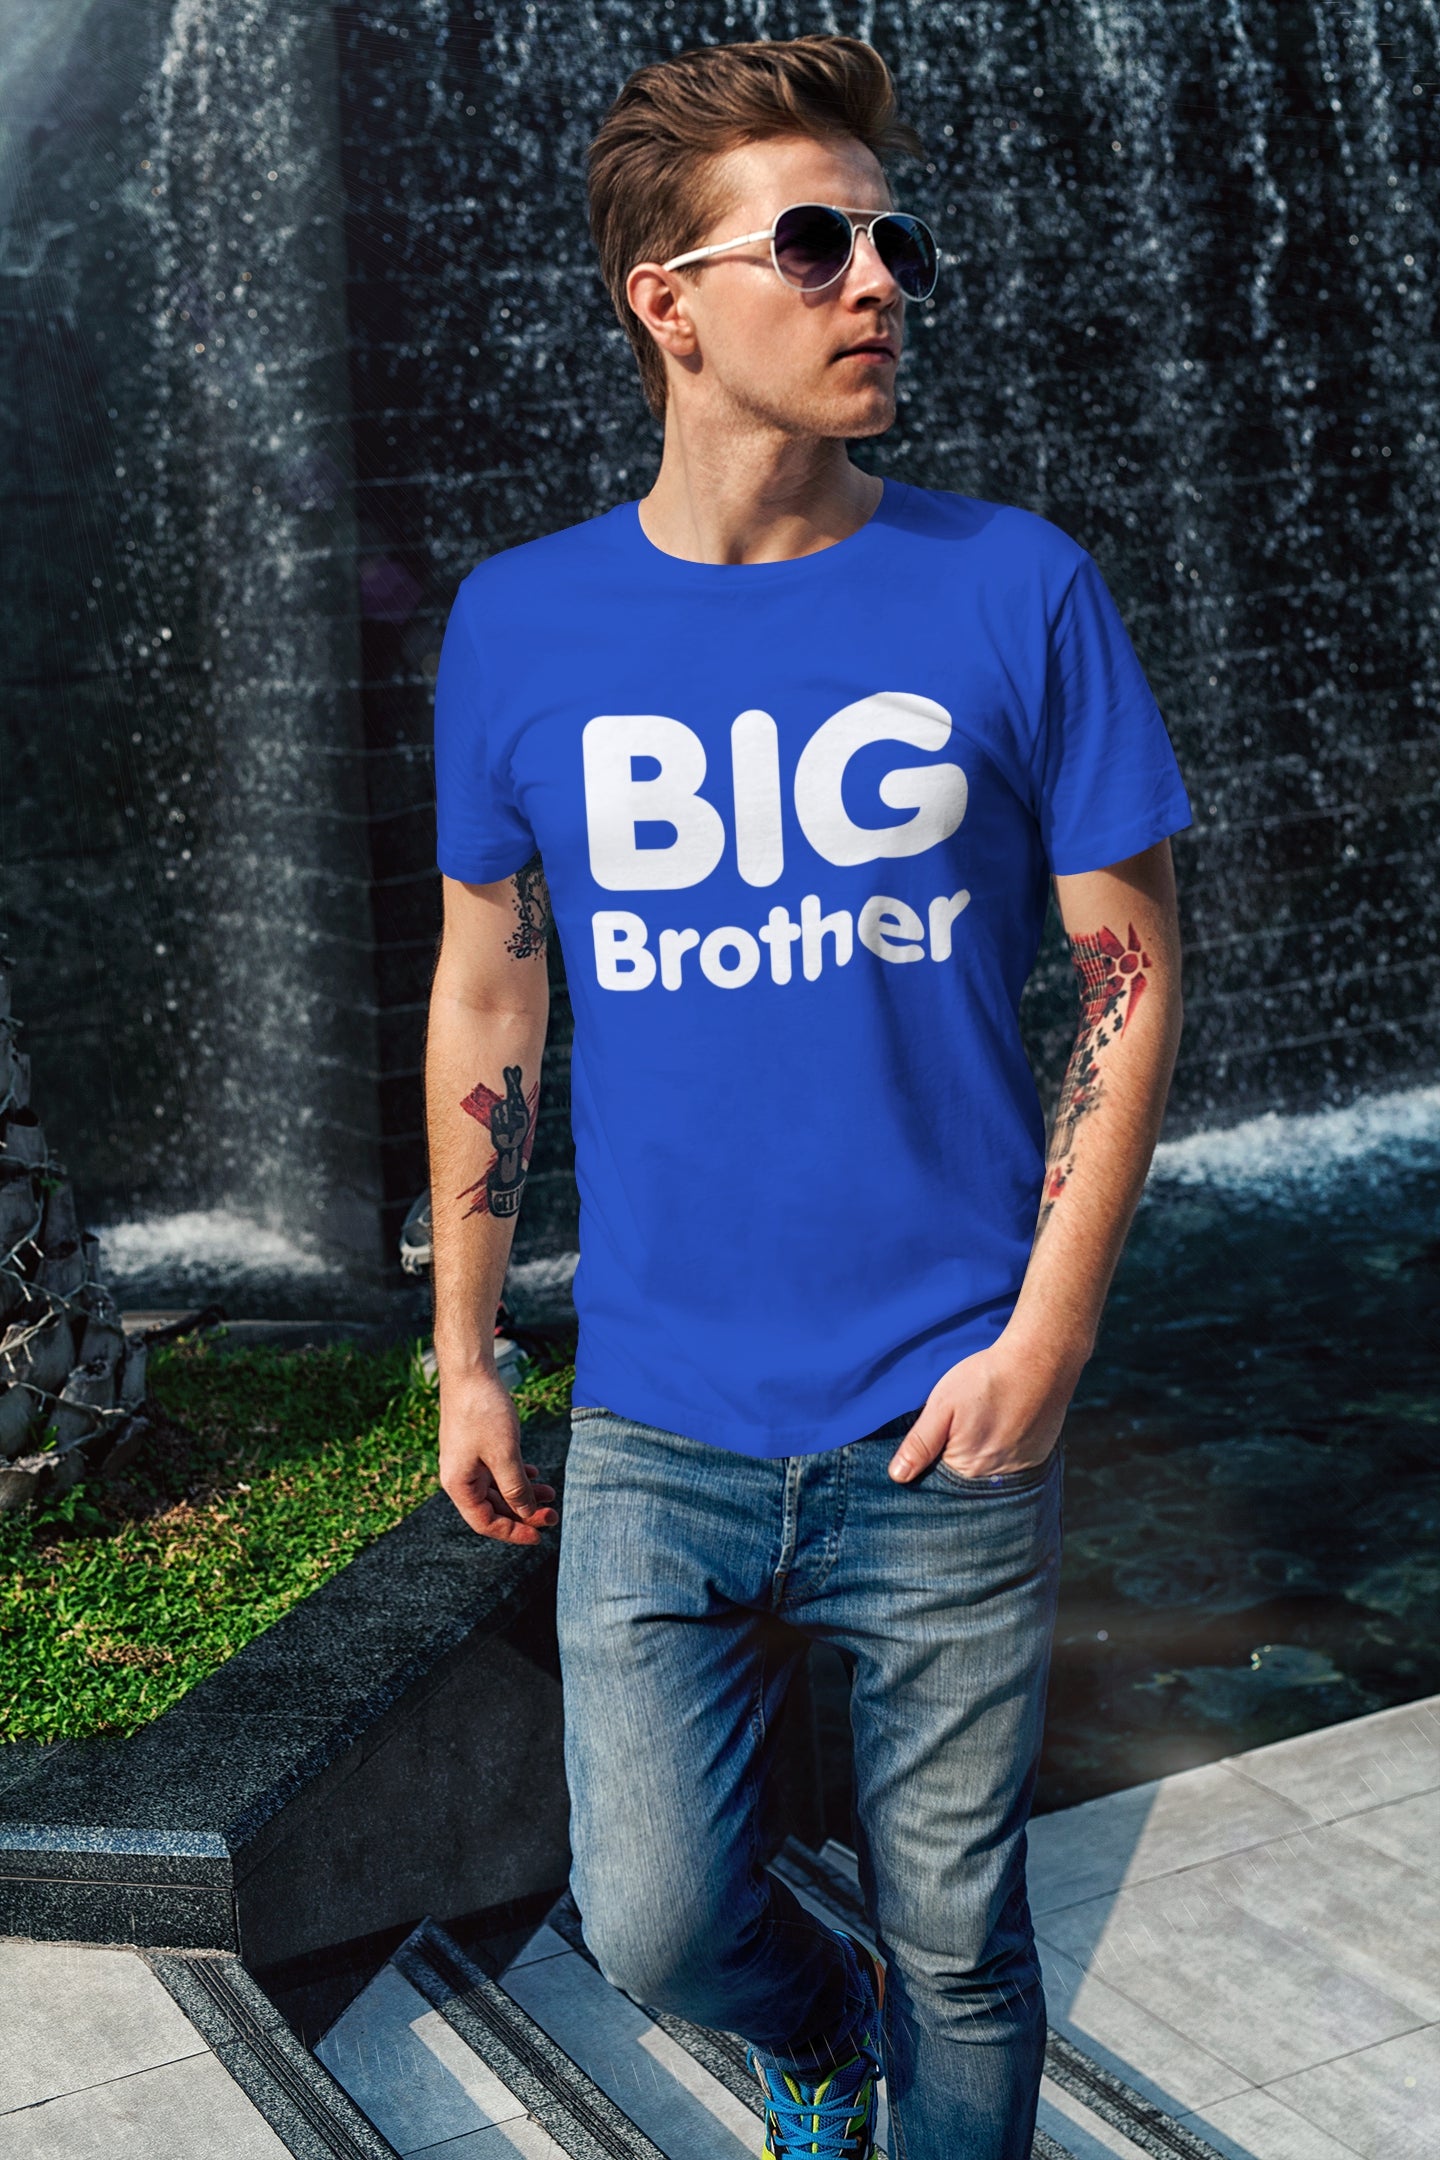 BIG BROTHER Adult T-Shirt (#809-1)